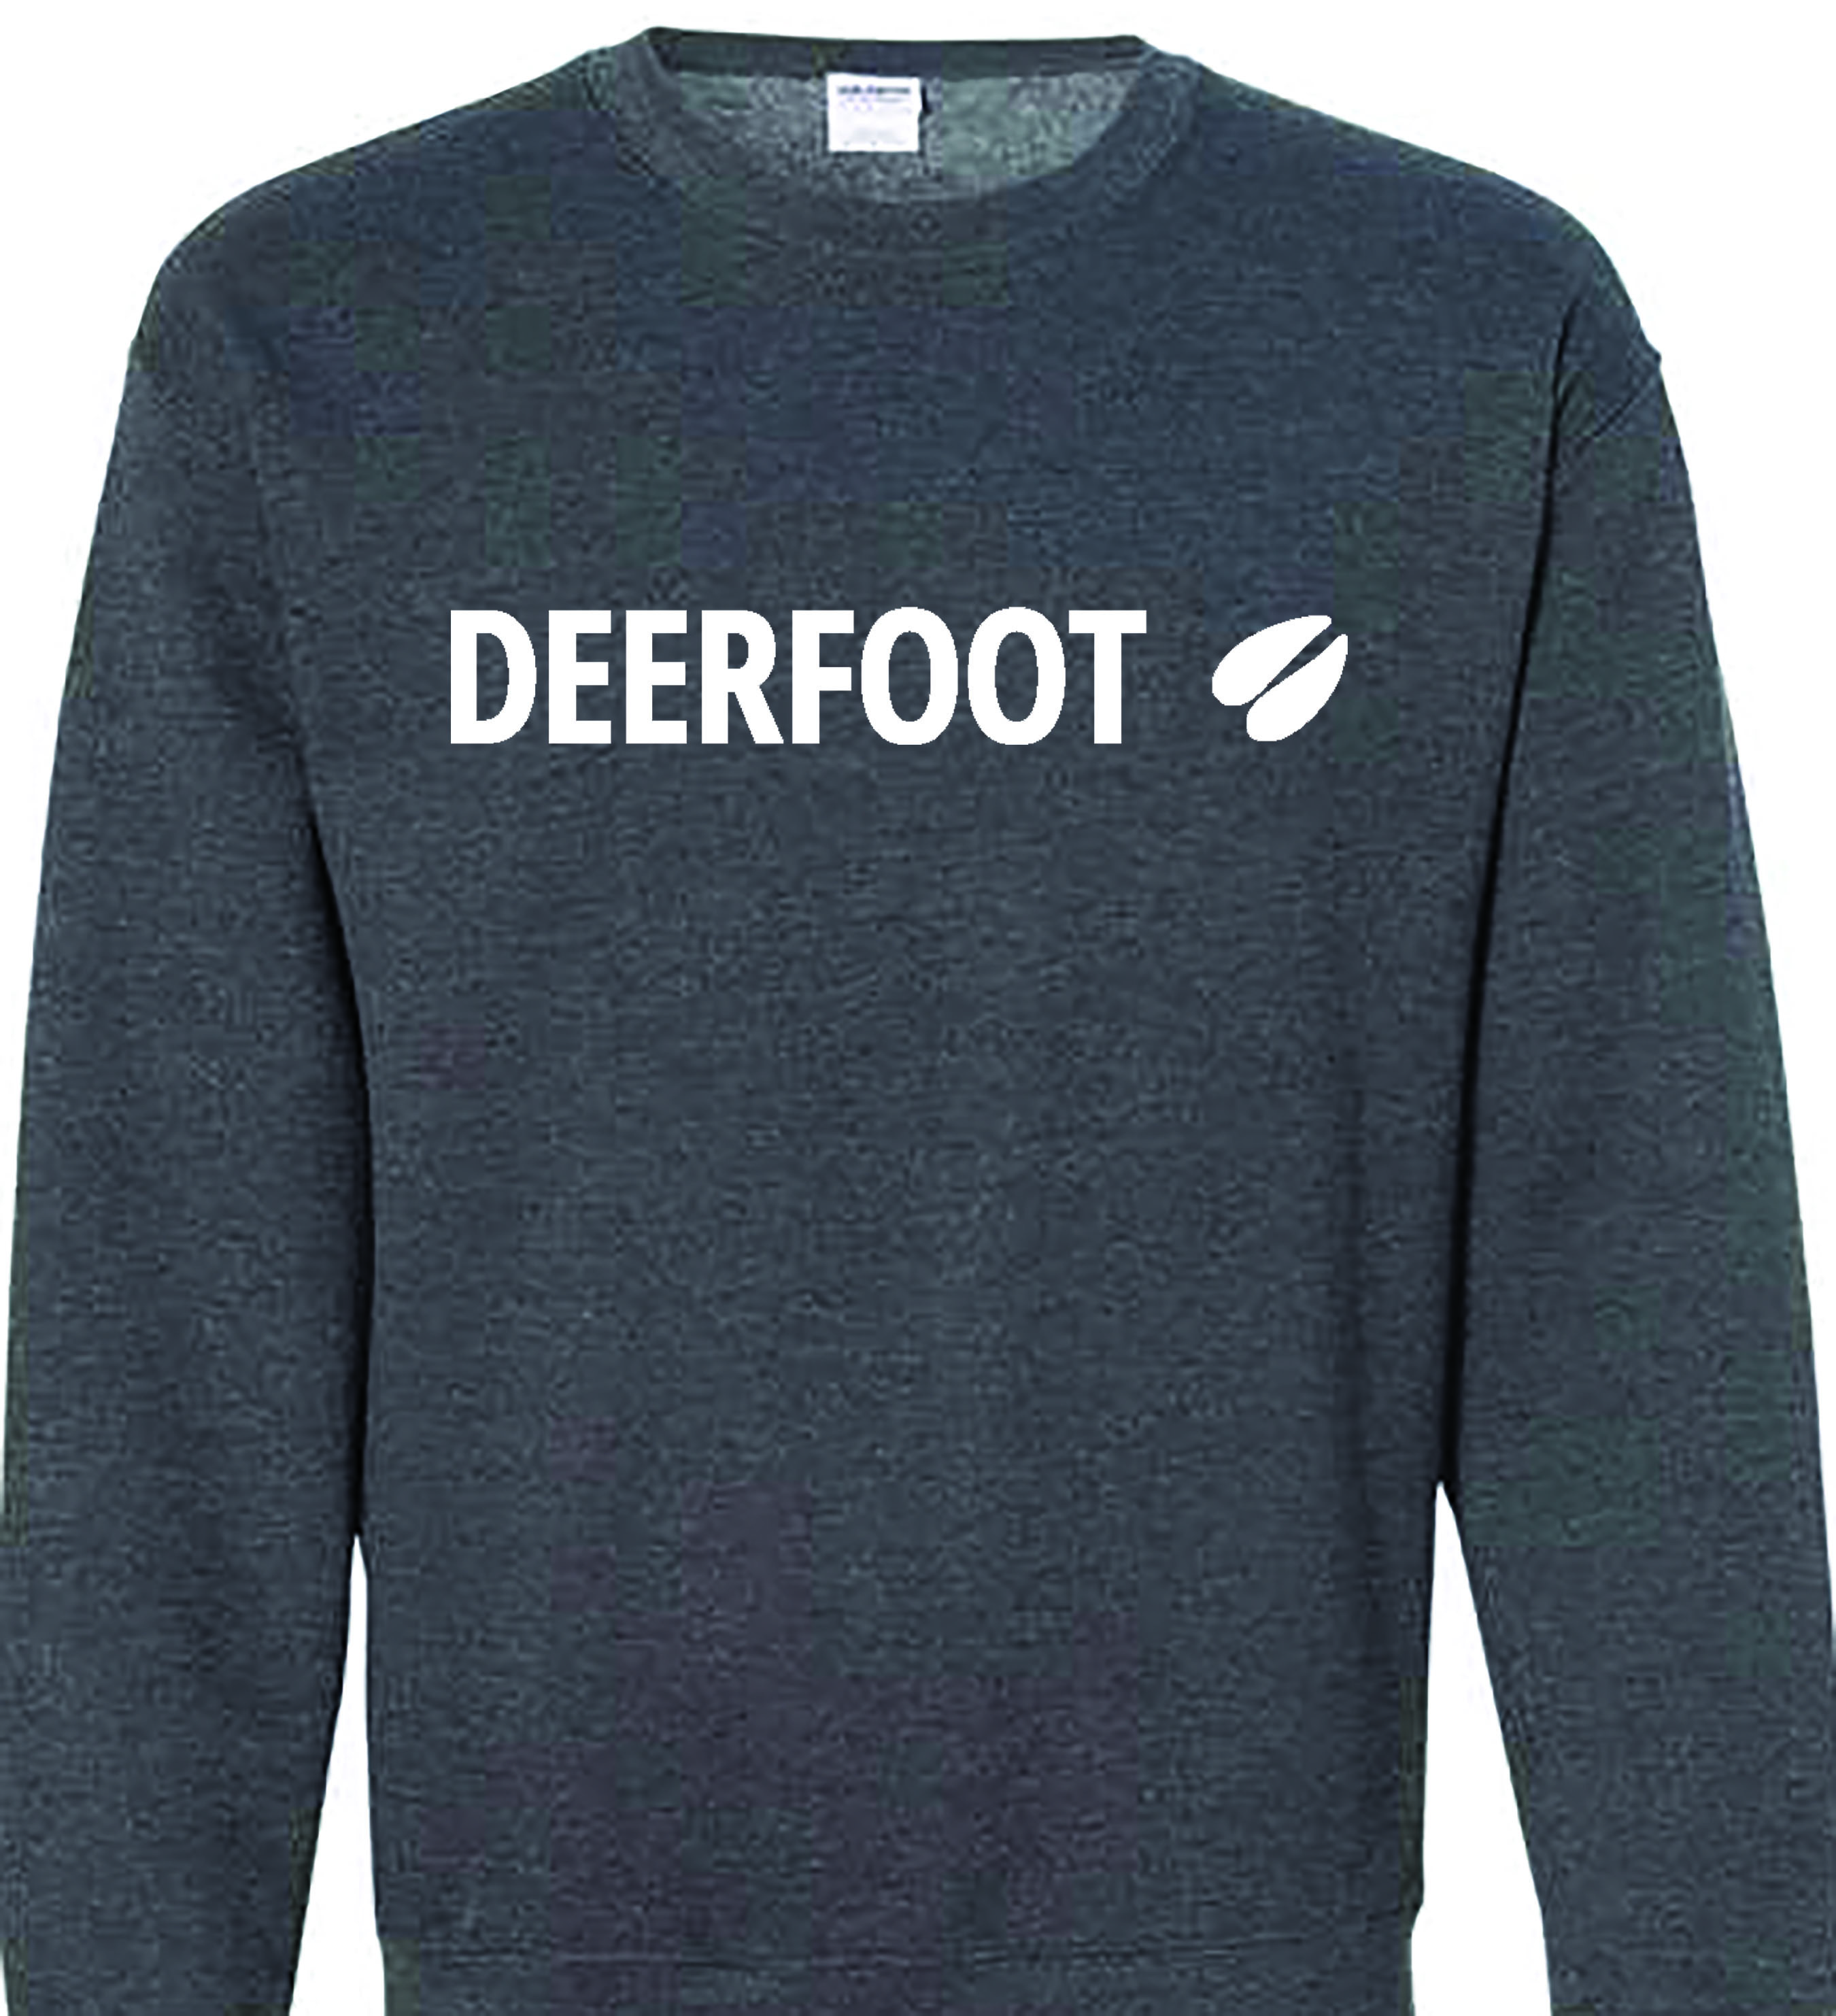 Deerfoot Logo on Dark Heather Crew